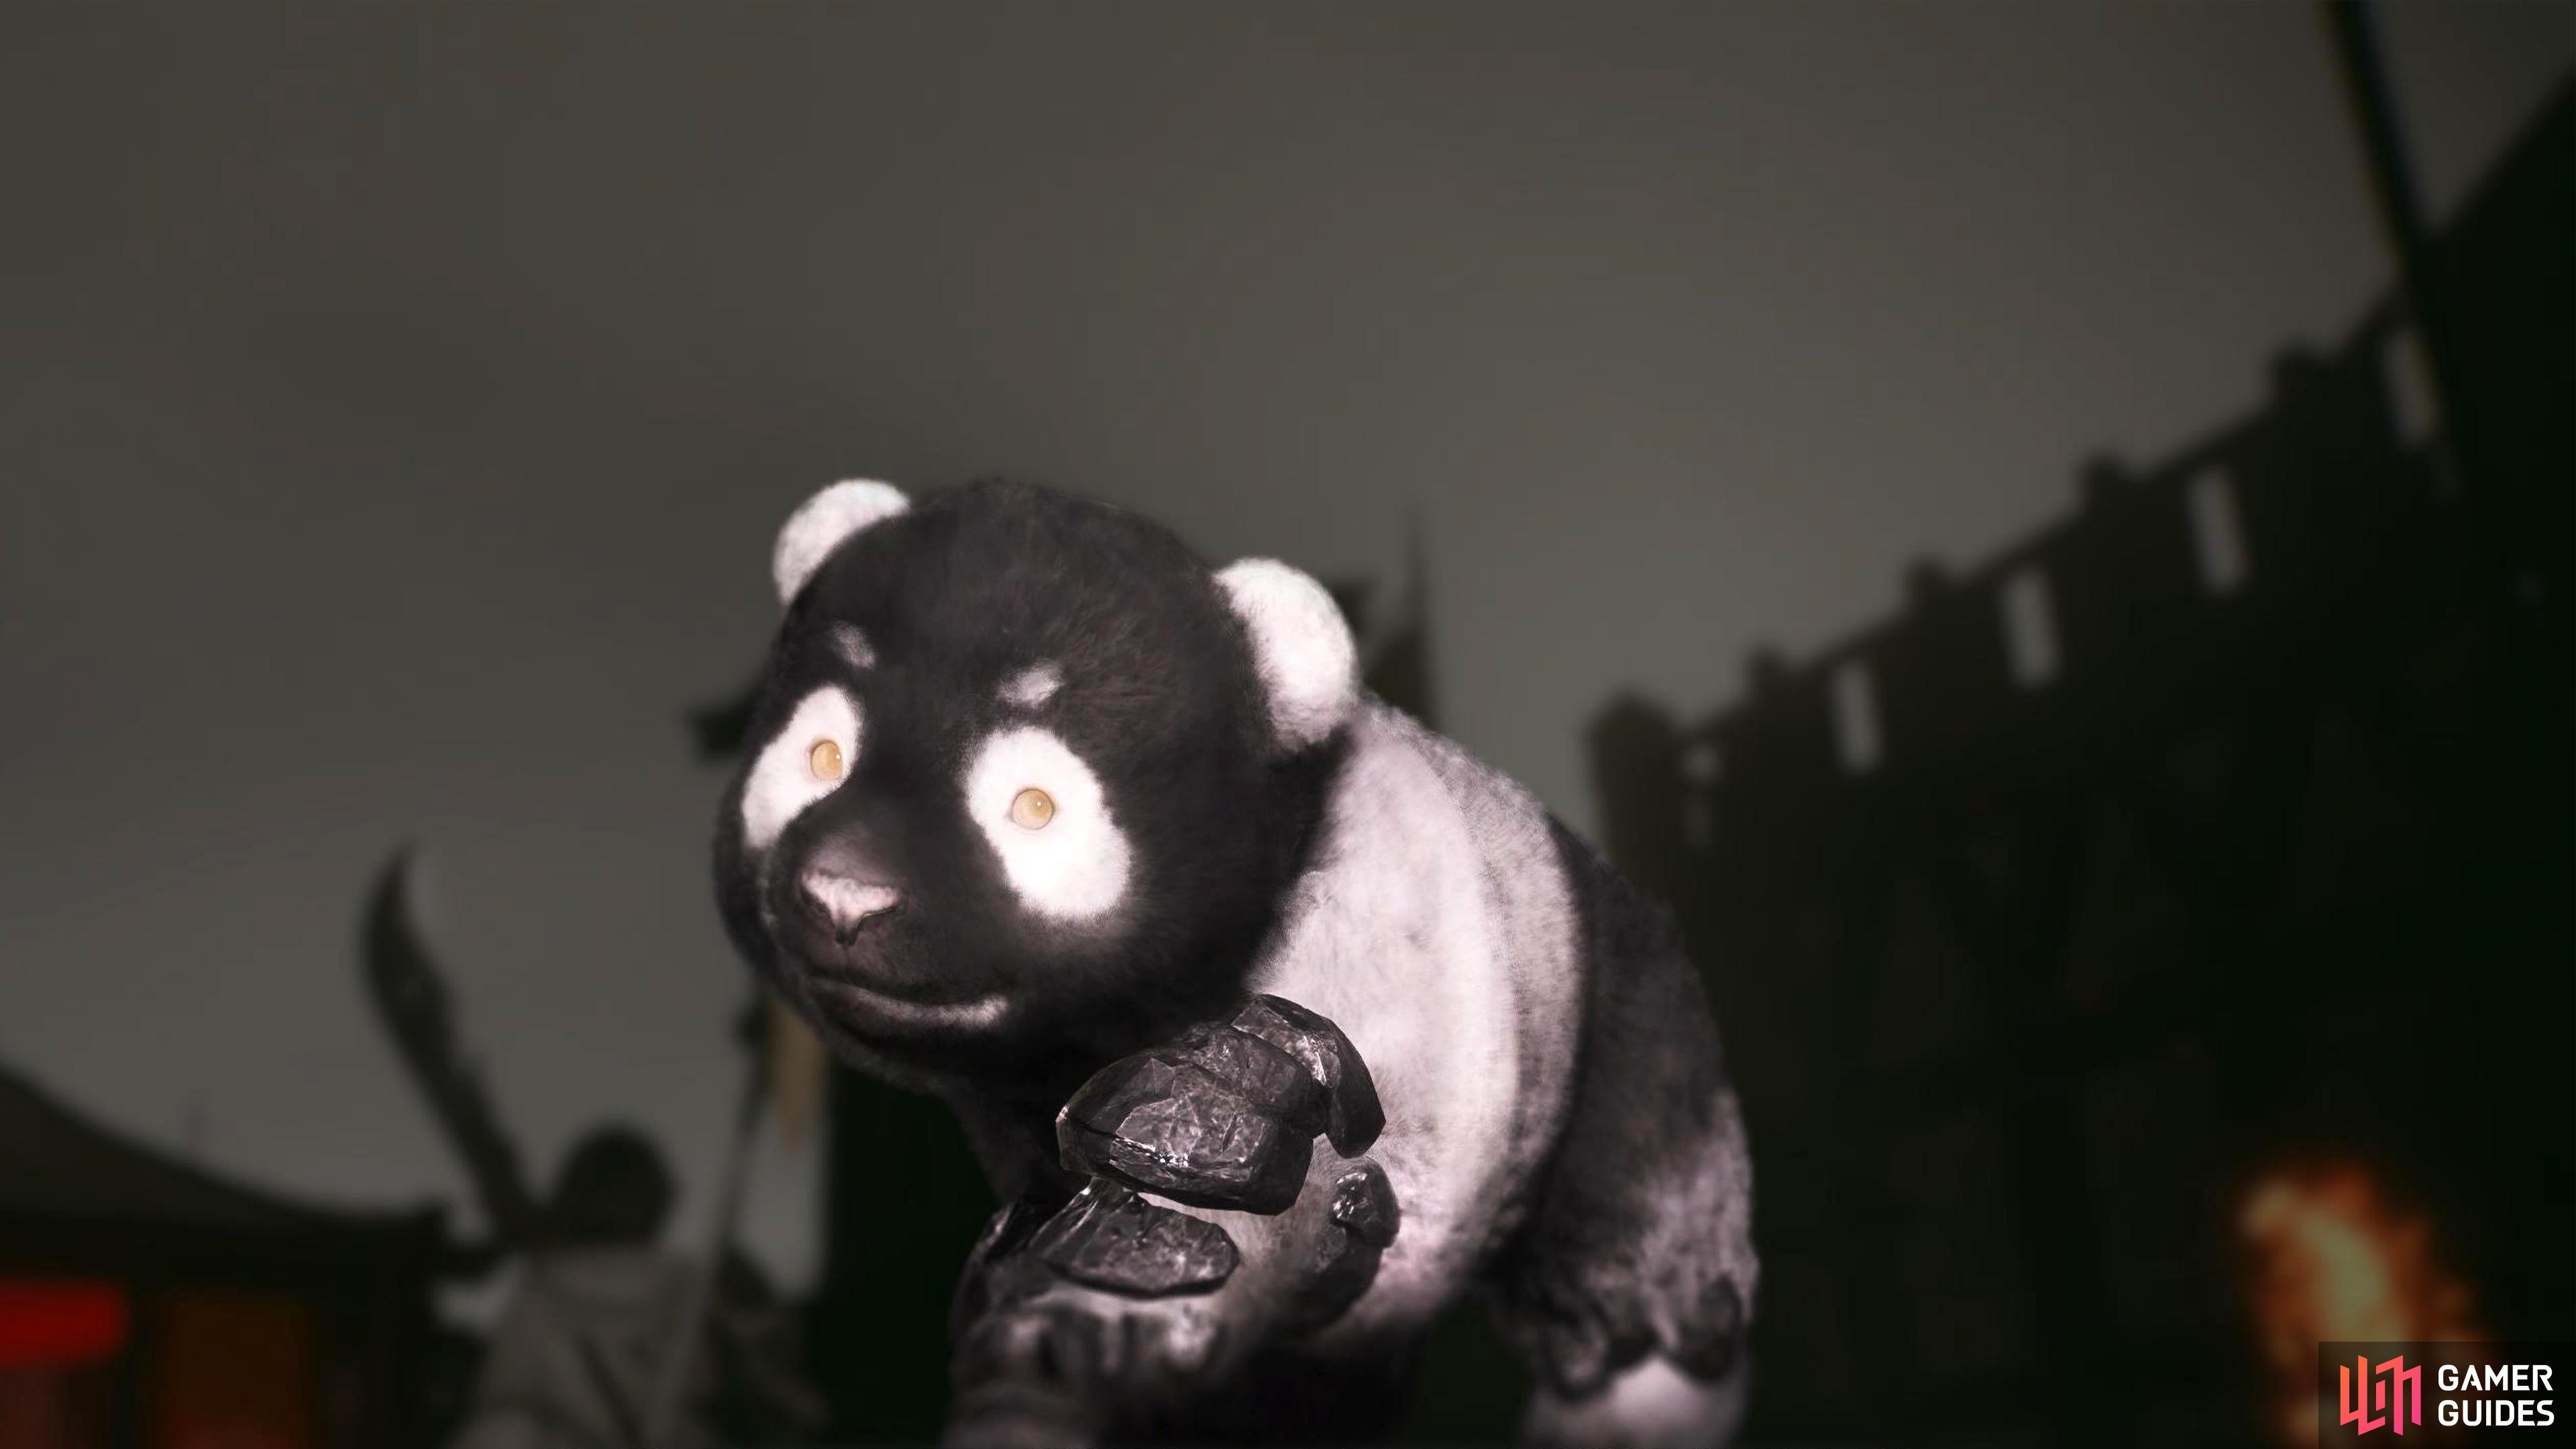 Shitieshou's are panda-like friendly demons who'll offer you a reward if you feed them.